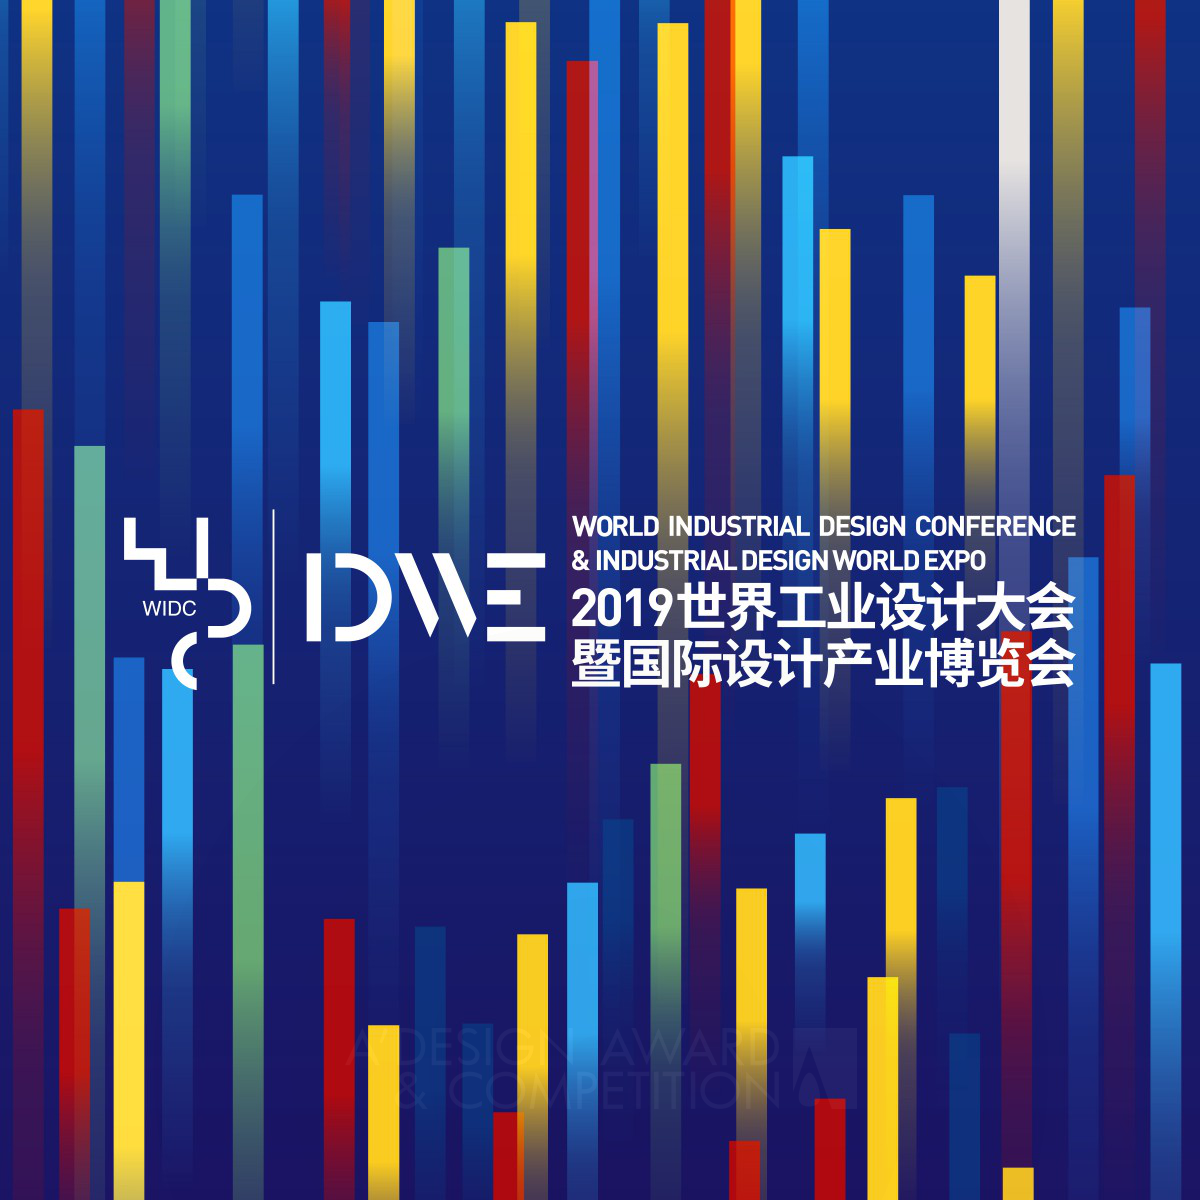 2019 World Industrial Design Conference